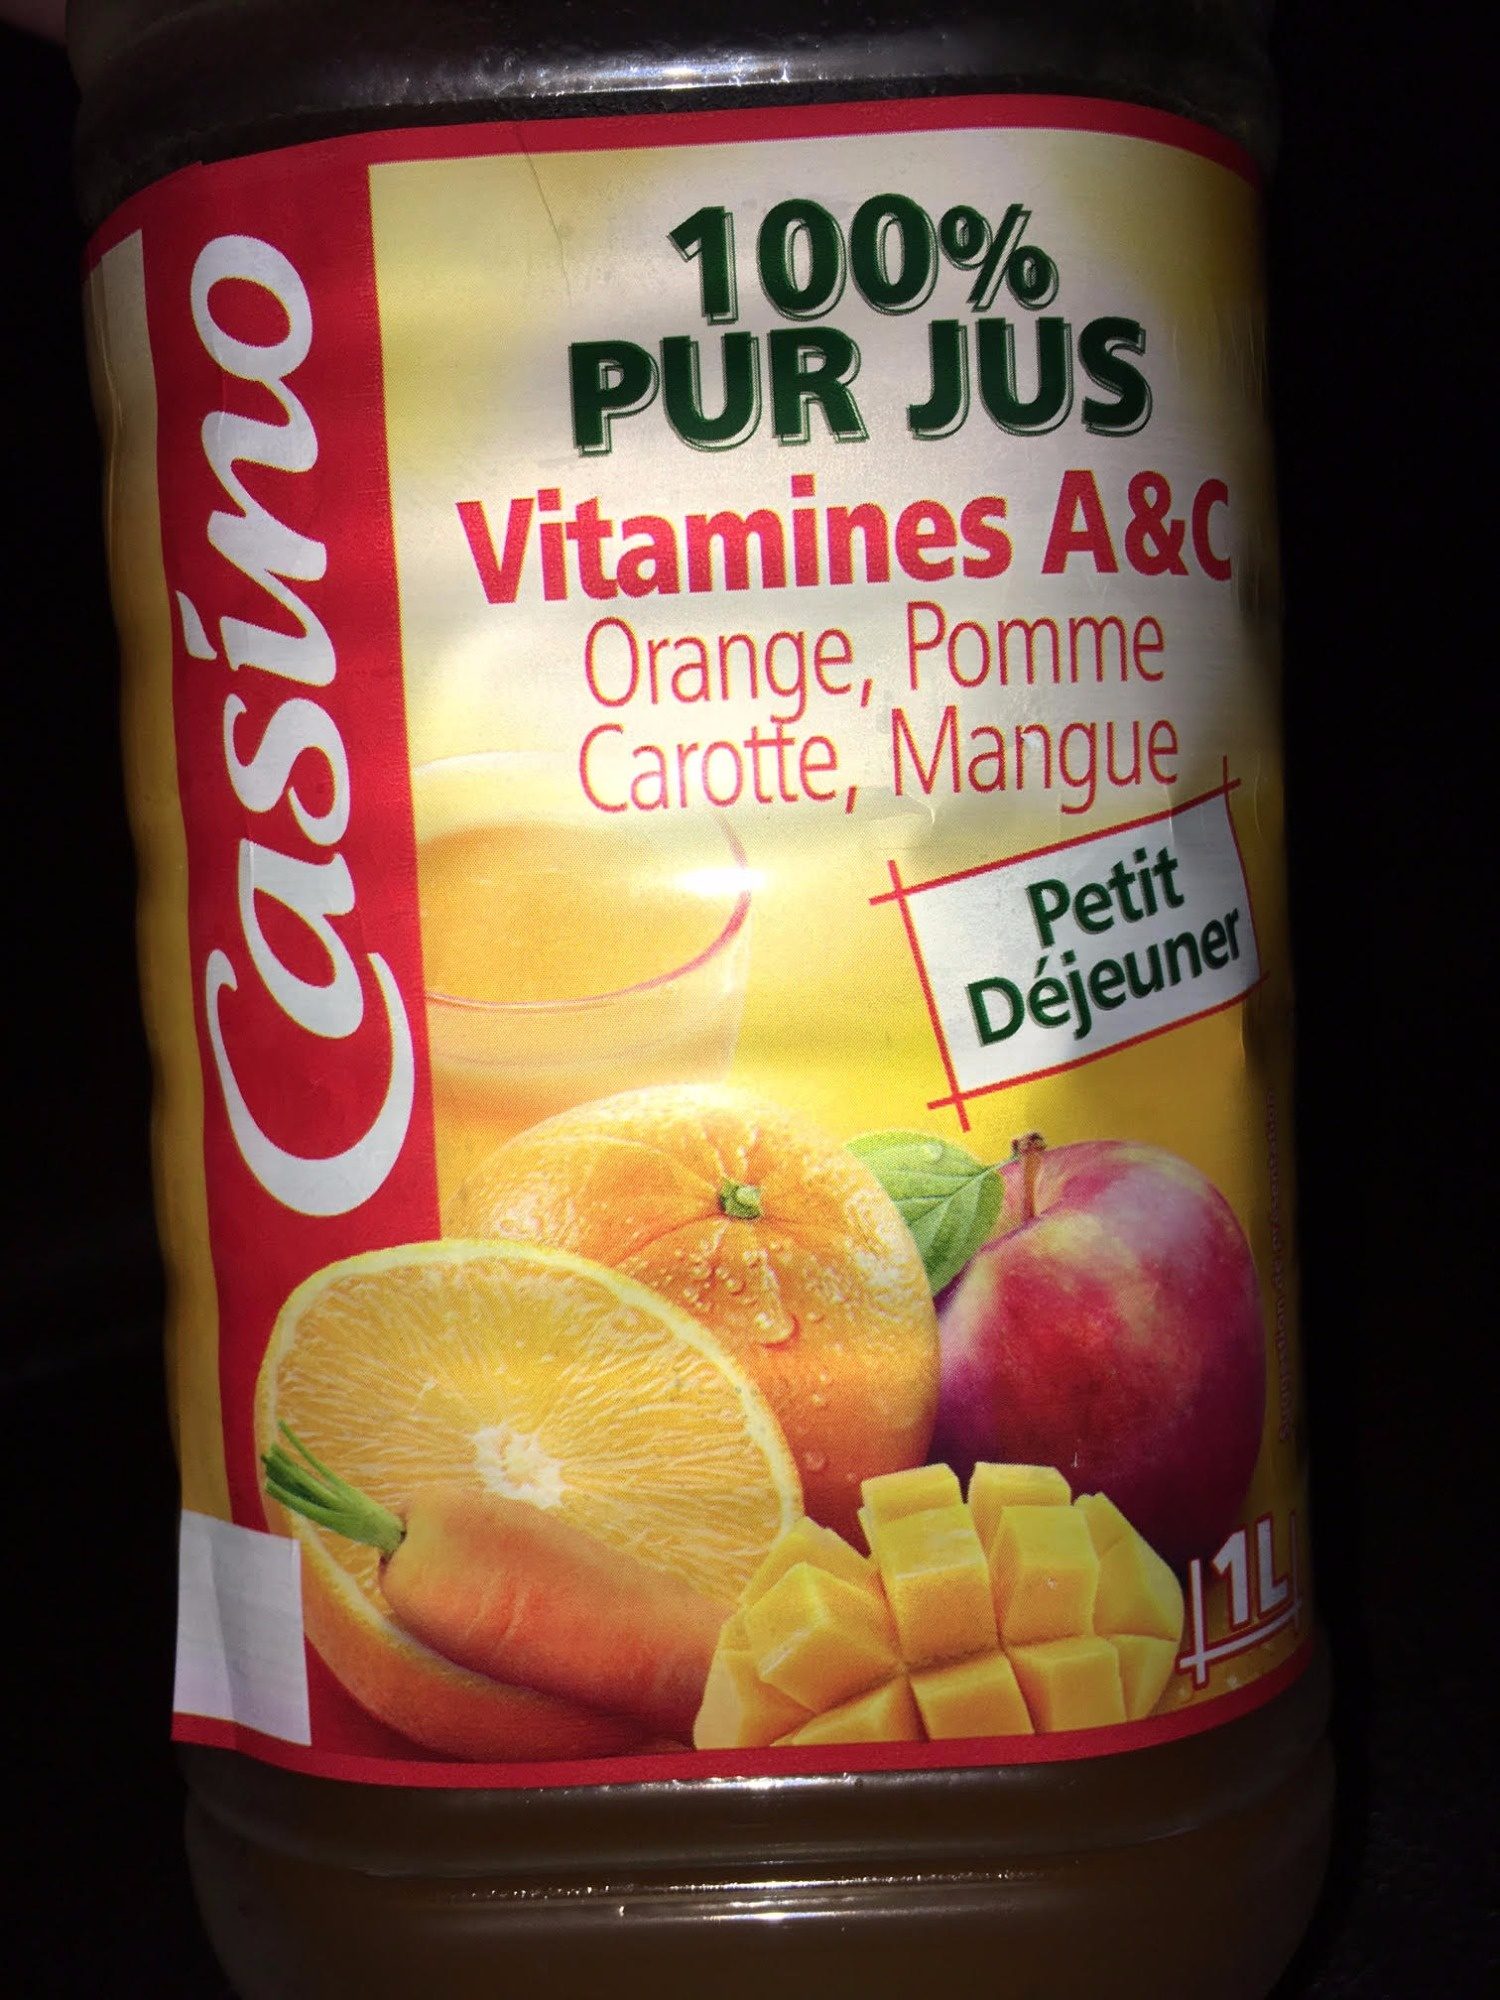 100% Pur jus Source de vitamines A & C - Producto - fr